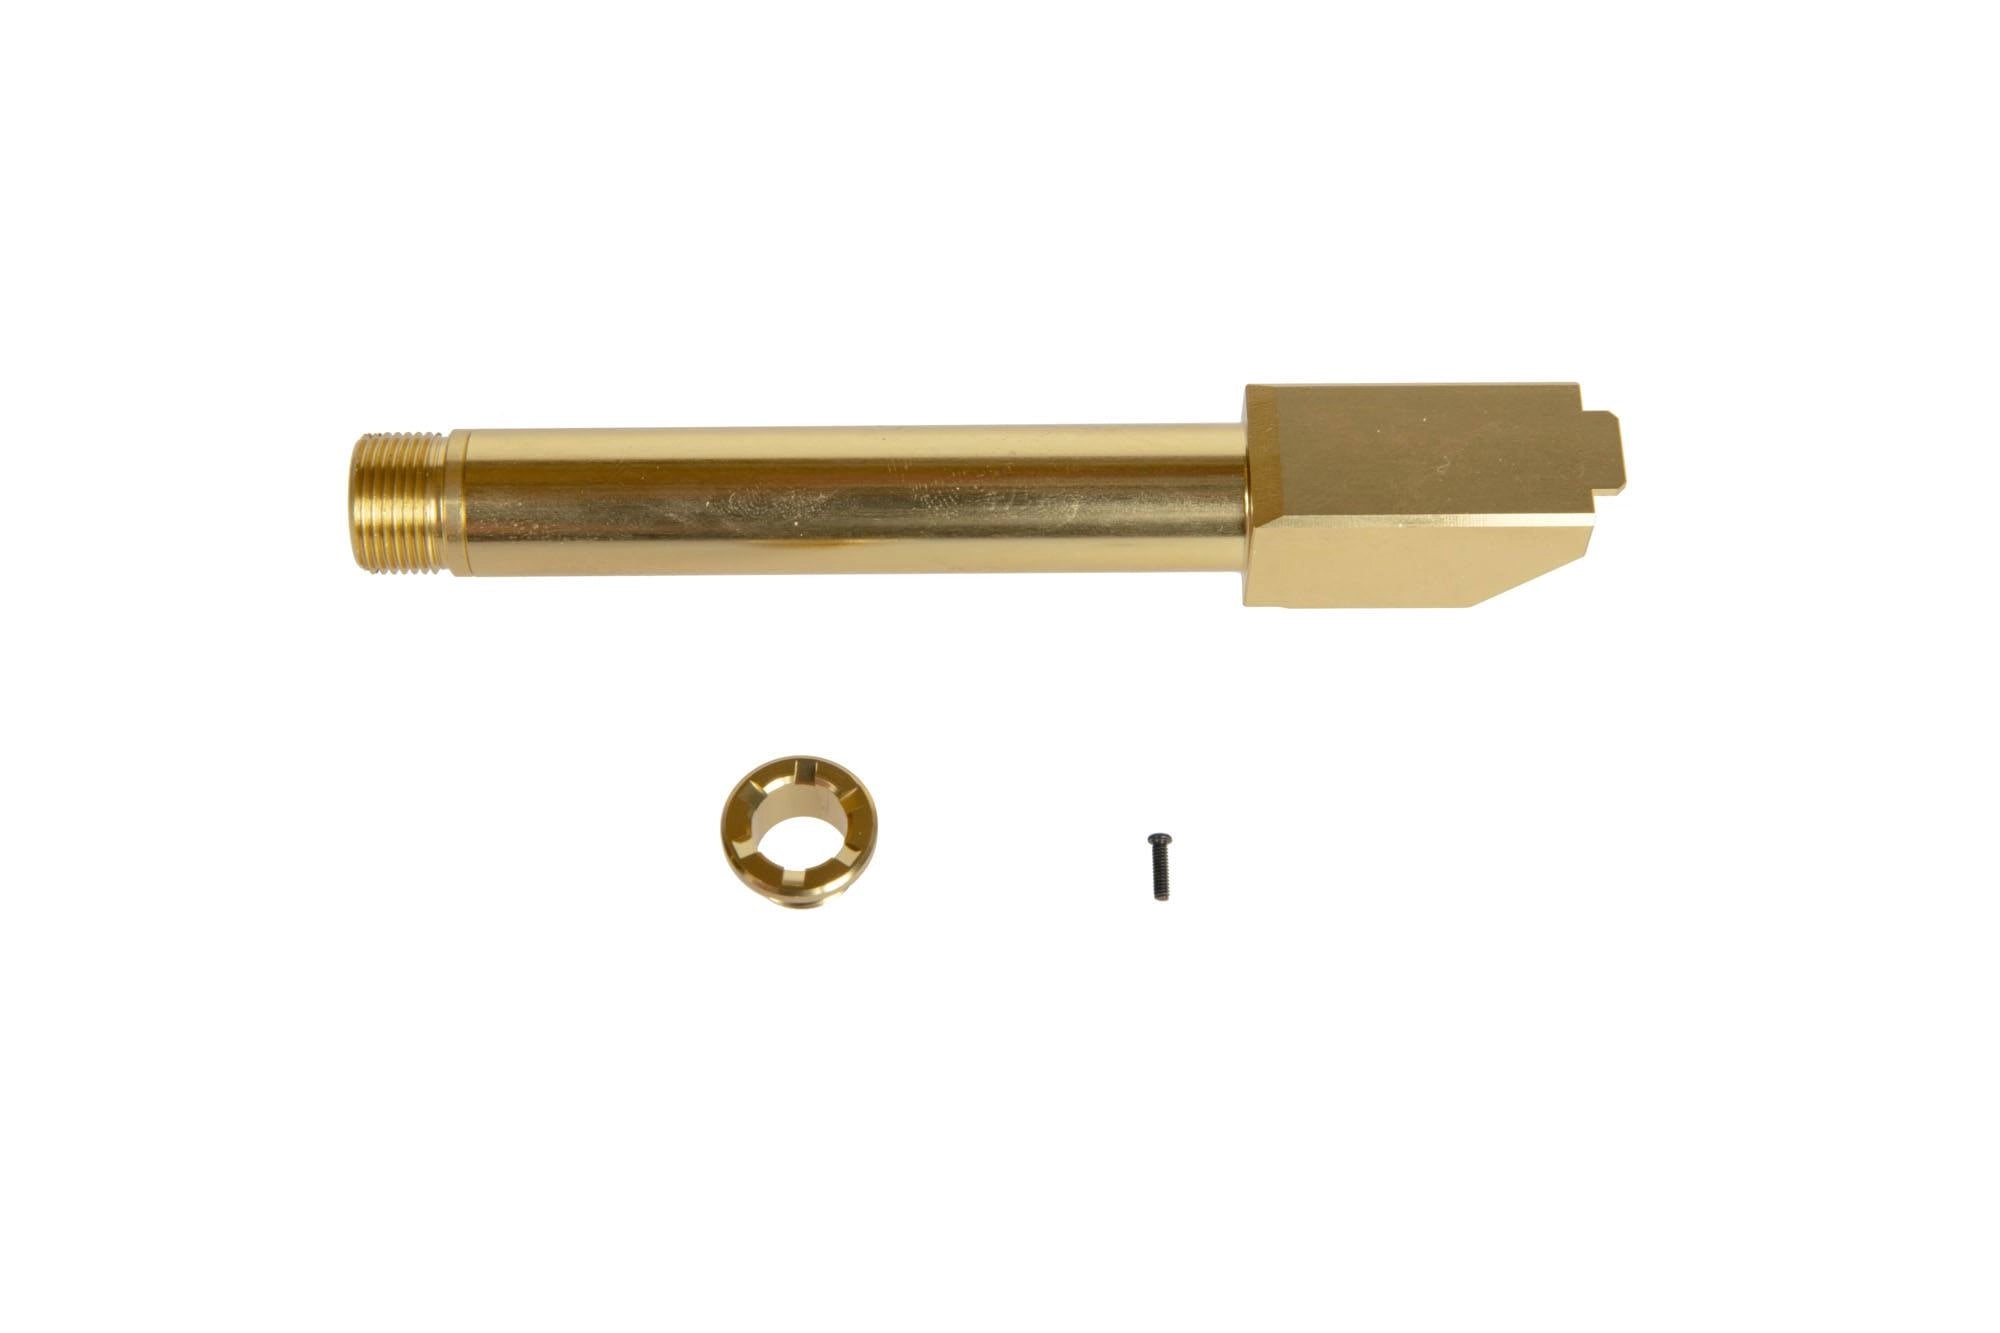 Non-Recoiling 2 Way Fixed" Outer Barrel for Umarex Glock 17 Replicas - Gold"-2